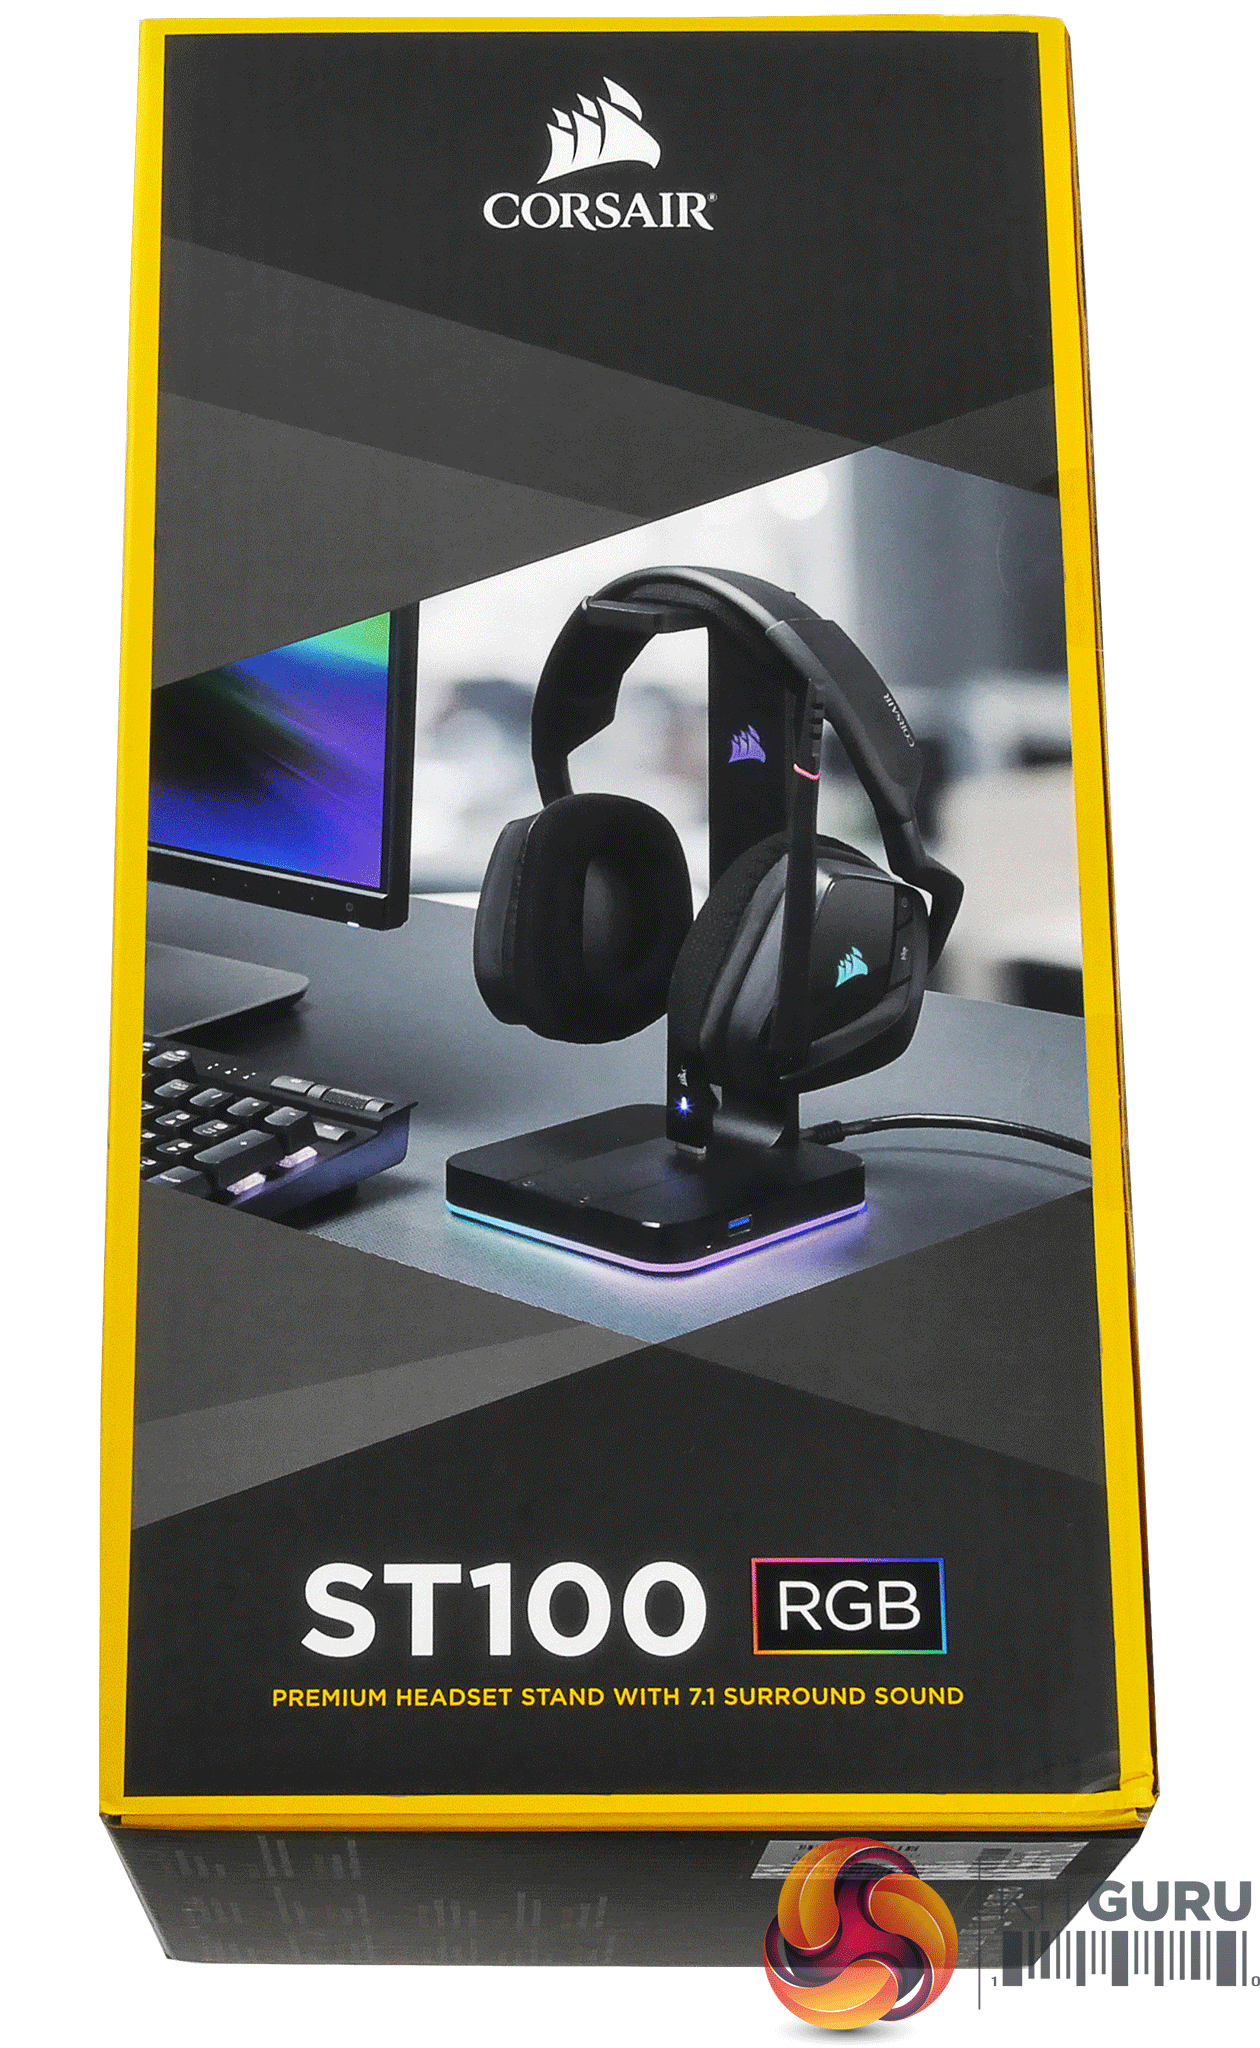 ST100 RGB Premium Headset Stand with 7.1 Surround Sound (EU)